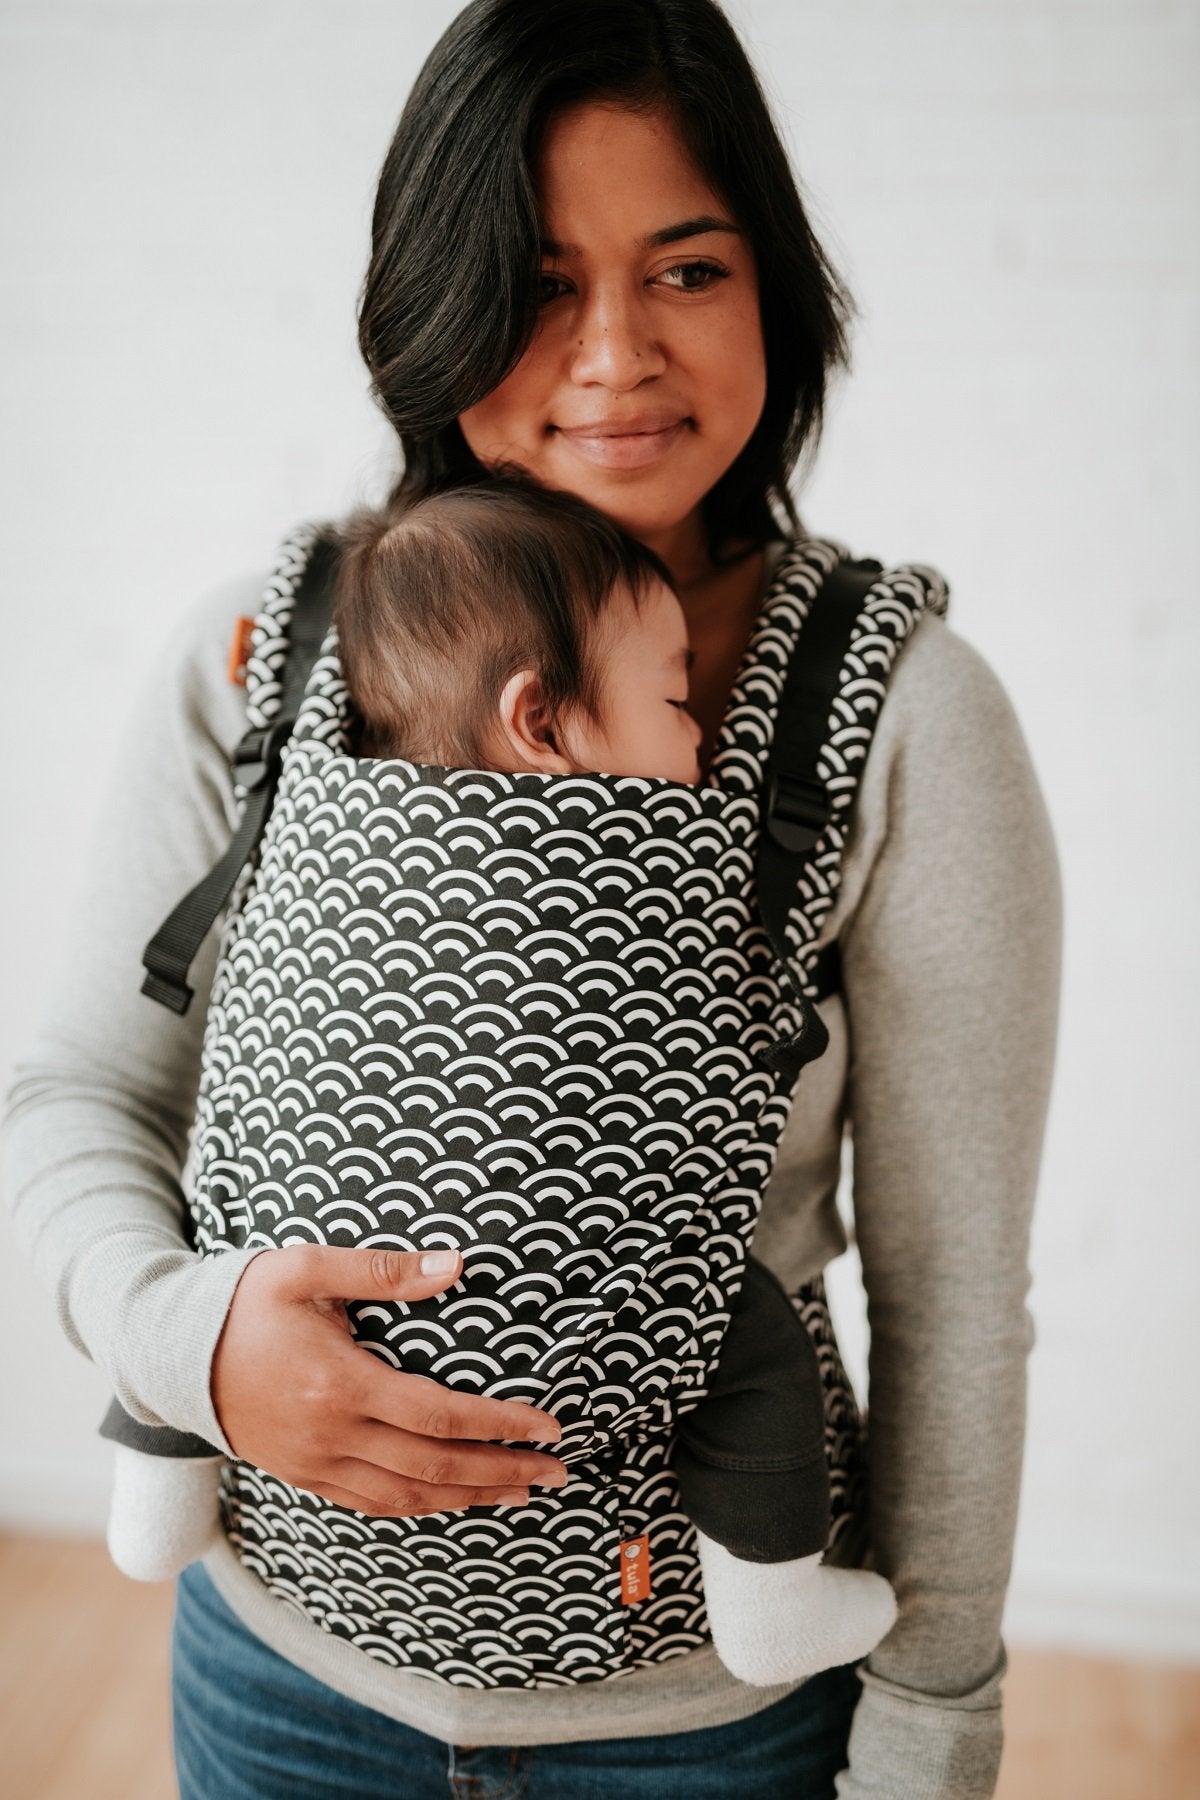 Tempo - Tula Free-to-Grow Baby Carrier - Baby Tula UK